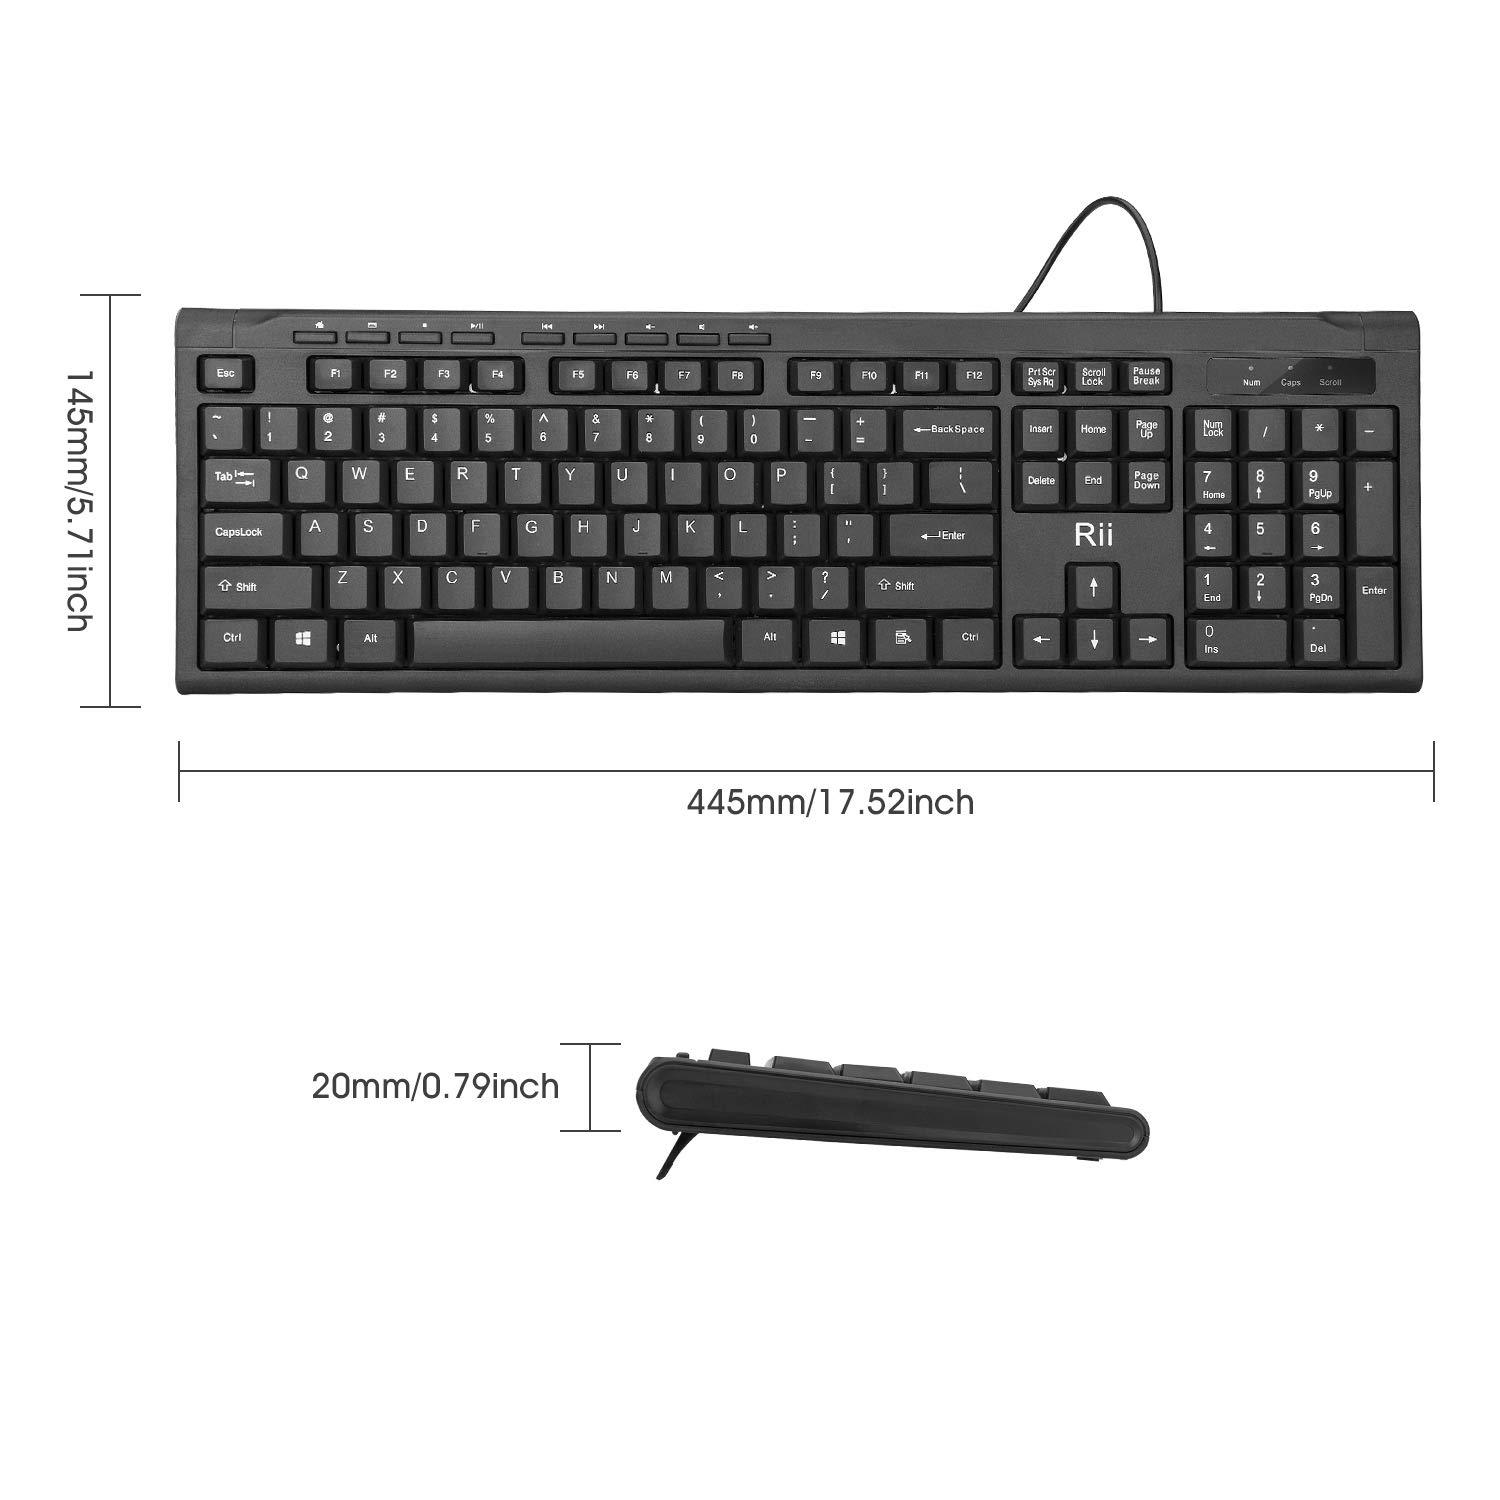 Rii (2-Pack) RK907 Wired Computer Keyboard,Ultra-Slim Compact USB Wired Keyboard– Basic Black Keyboard with Numeric Keypad for PC,Laptop,Windows 10/8 / 7 / Vista/XP